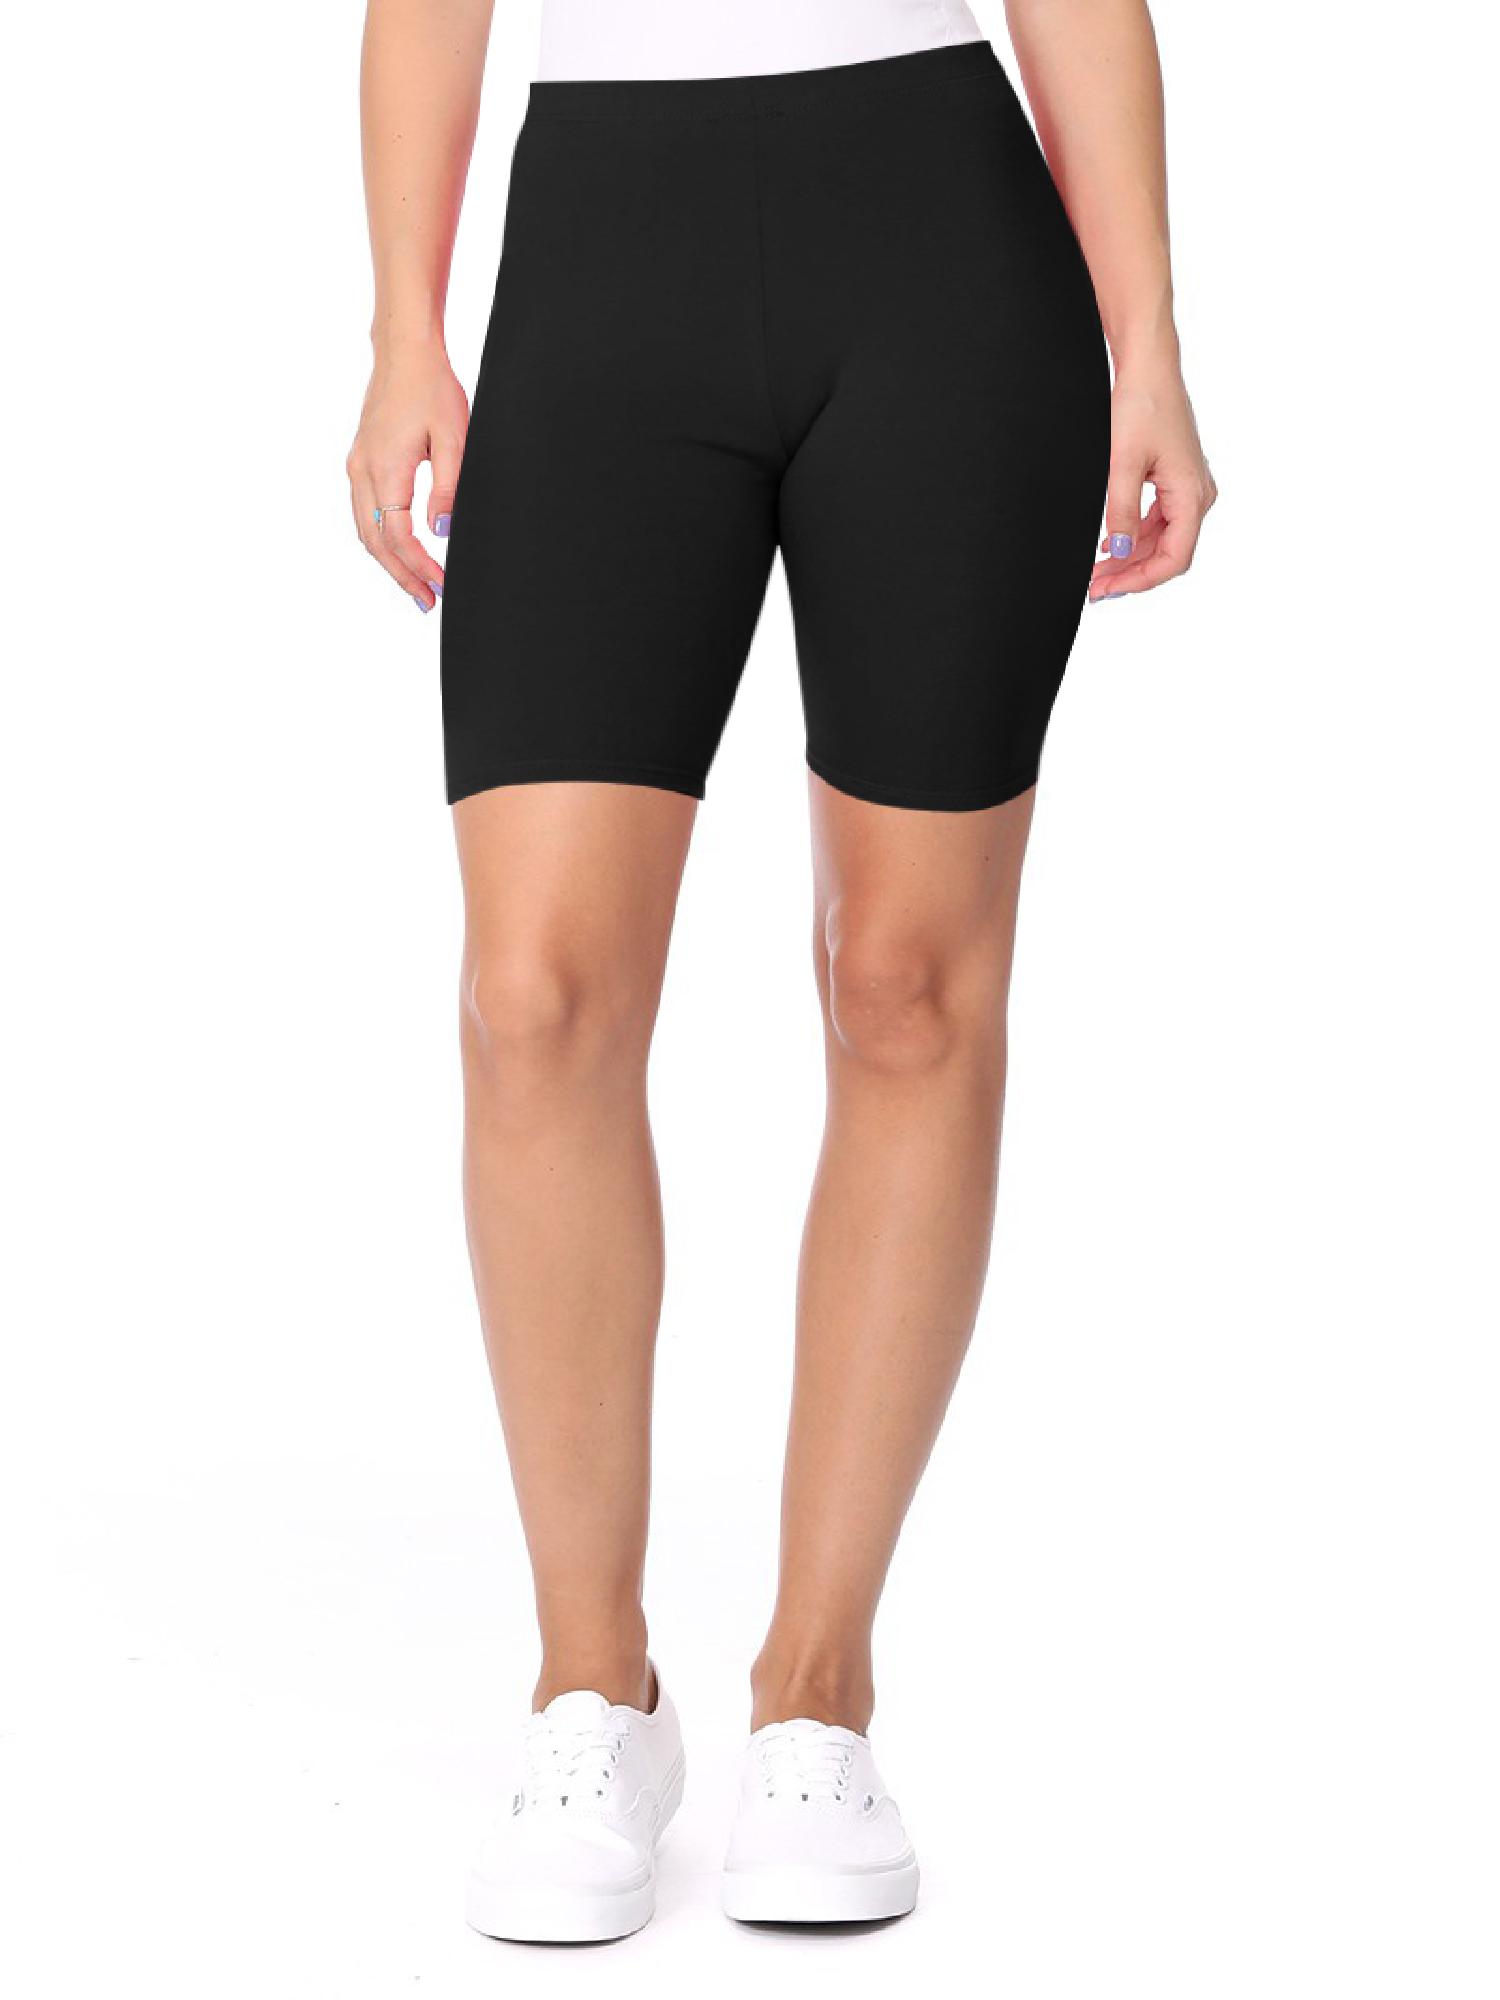 Women's Workout High Waist Comfy Elastic Band Solid Active Yoga Biker Shorts Pants S-3XL - image 1 of 5